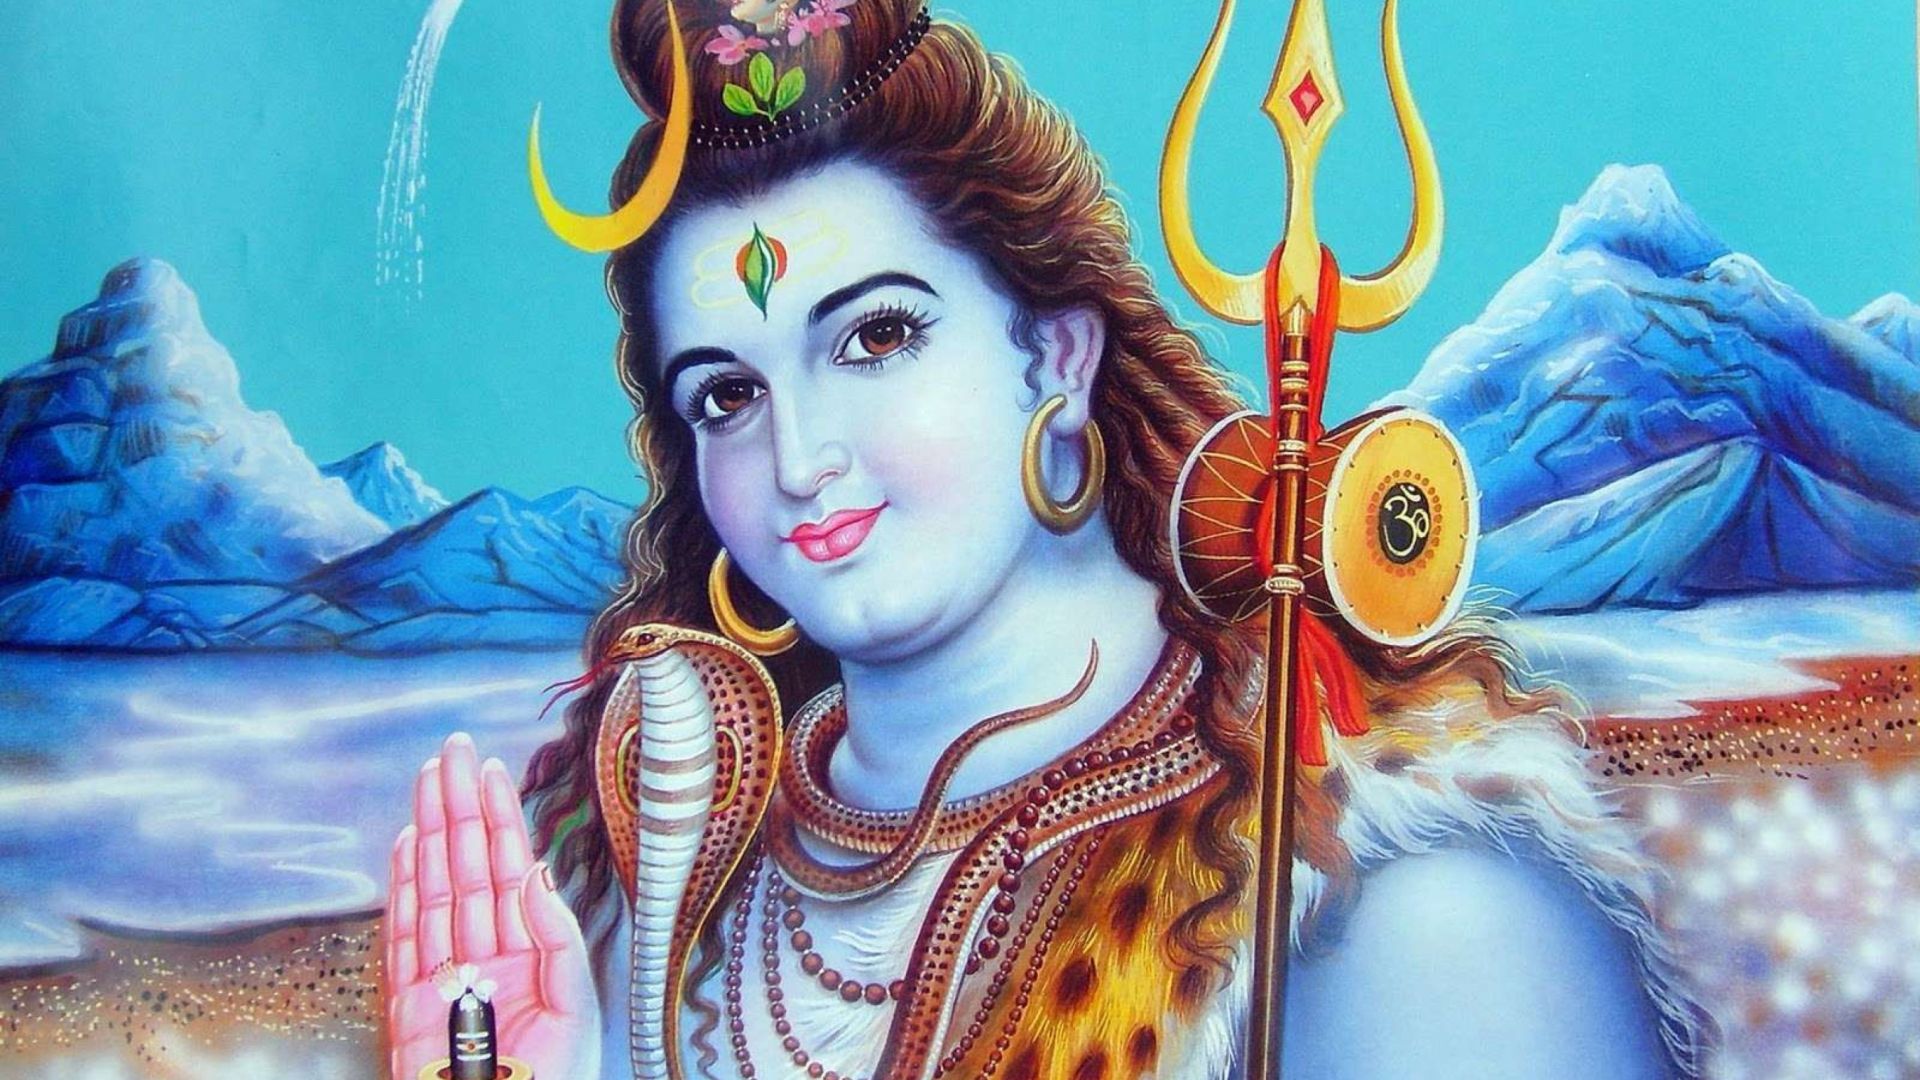 Shiva God desktop background hd